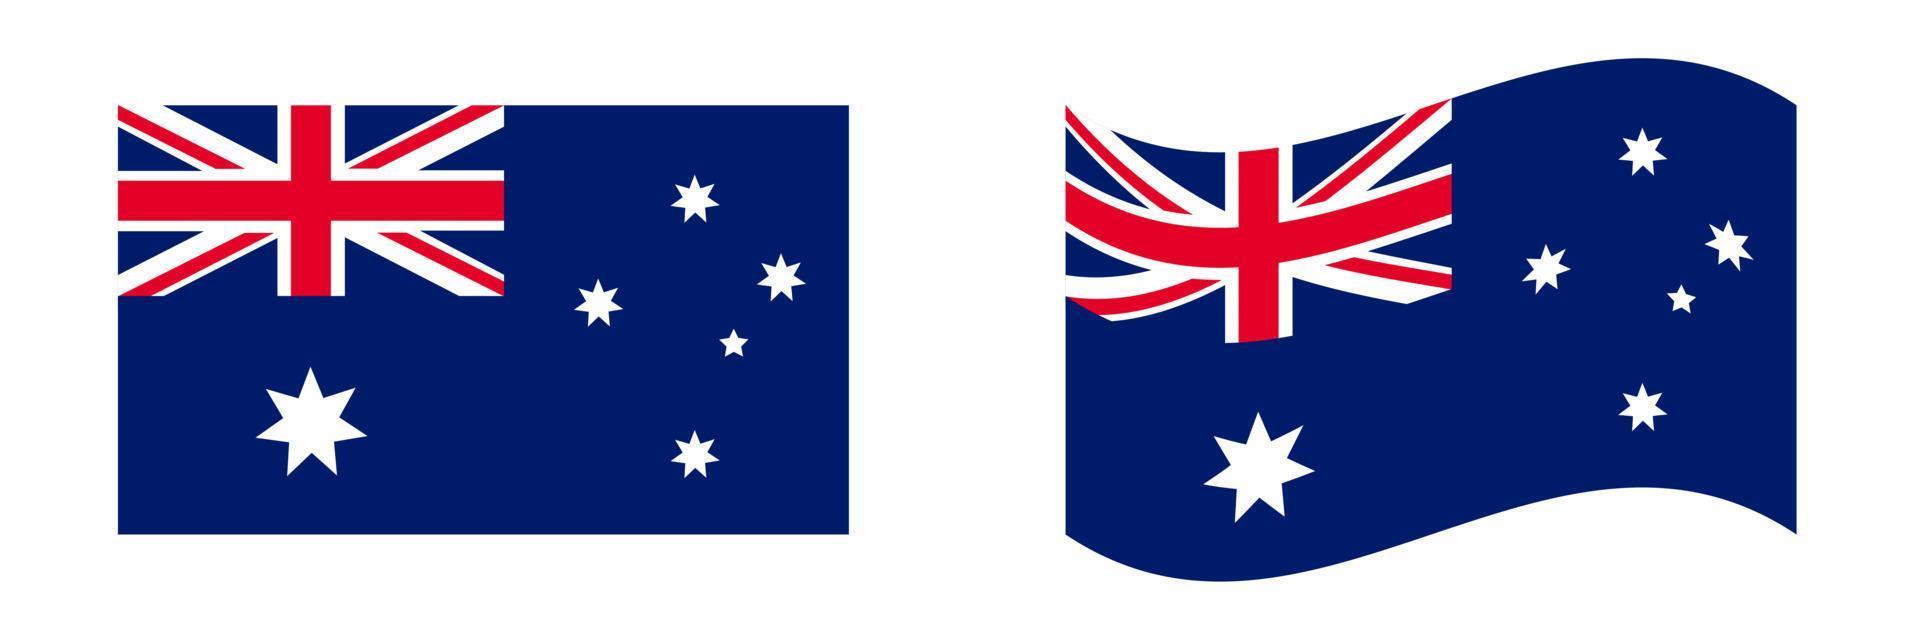 Australië vlag vector, vector illustratie set.